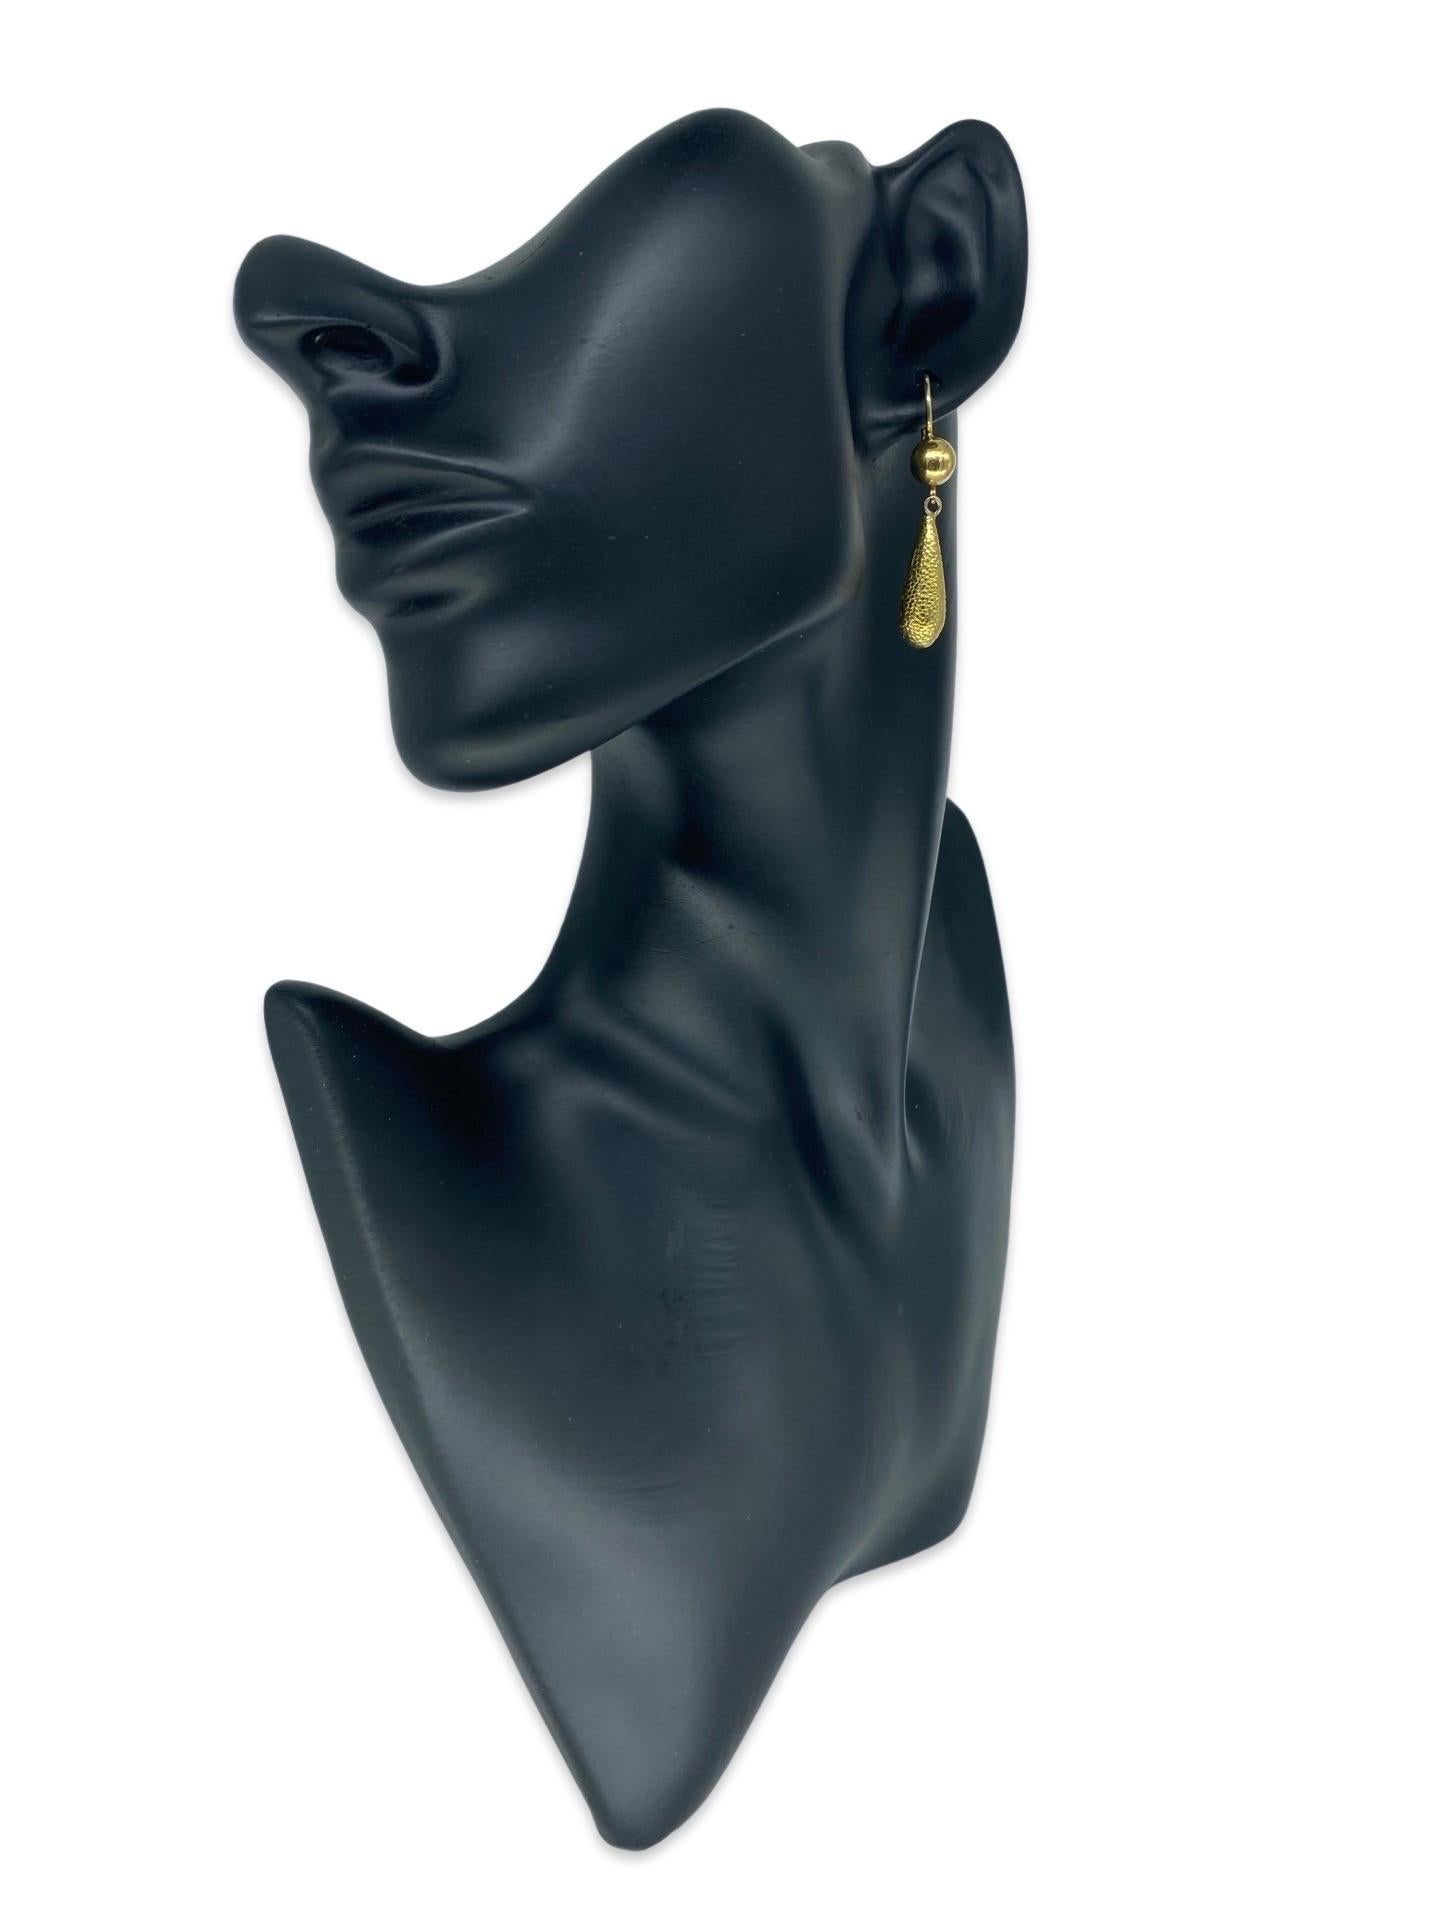 Vintage Designer Hammered Dangle Drop Lever Back Earrings 18k Gold Italy. Les boucles d'oreilles mesurent 32 mm de hauteur. Les boucles d'oreilles pèsent 7,4 g.